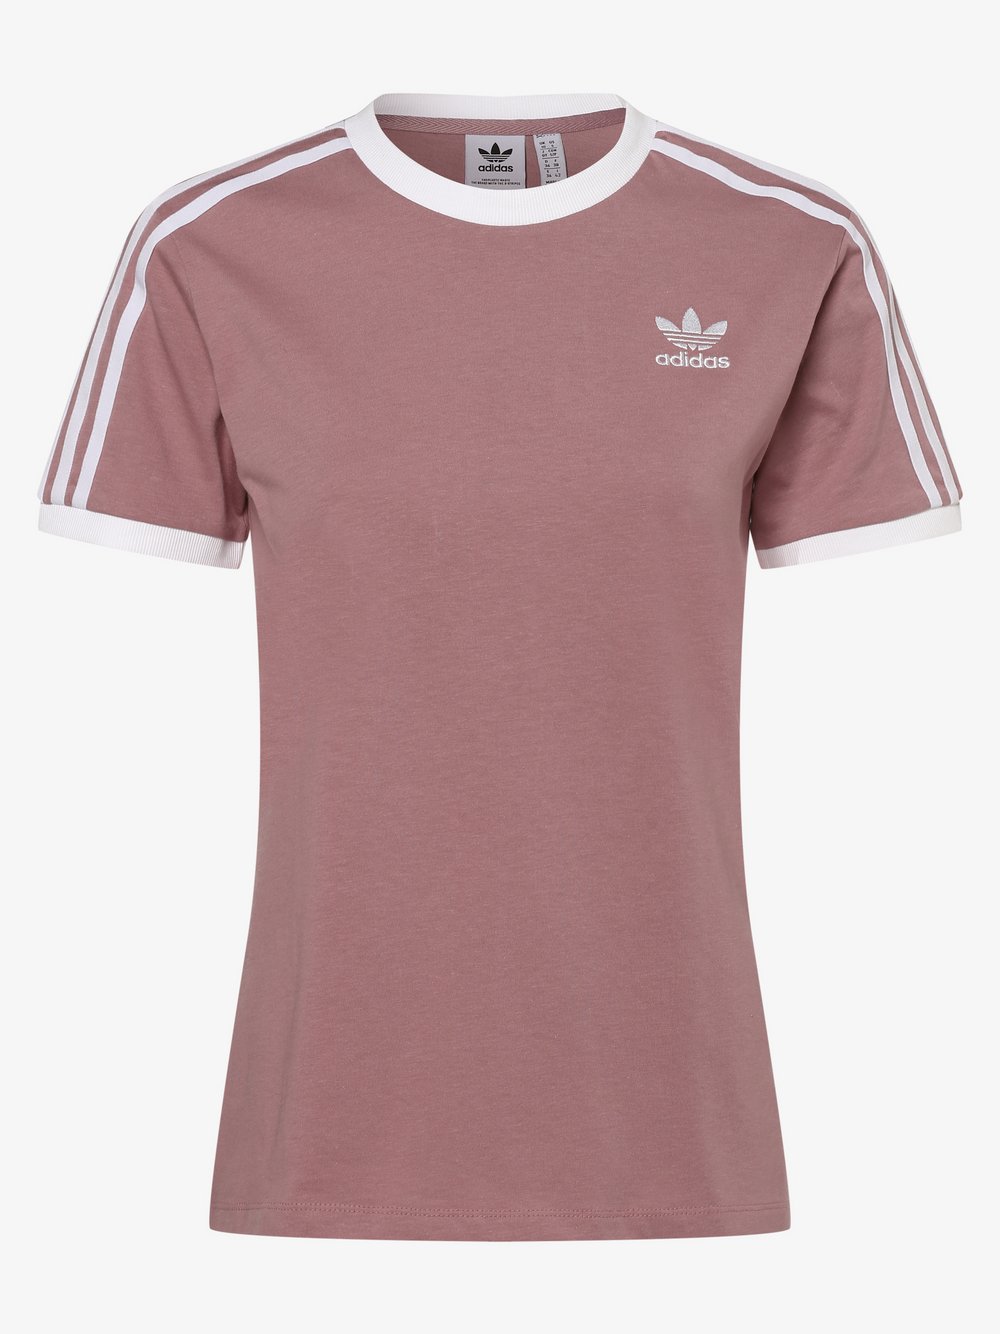 adidas Originals - T-shirt damski, różowy